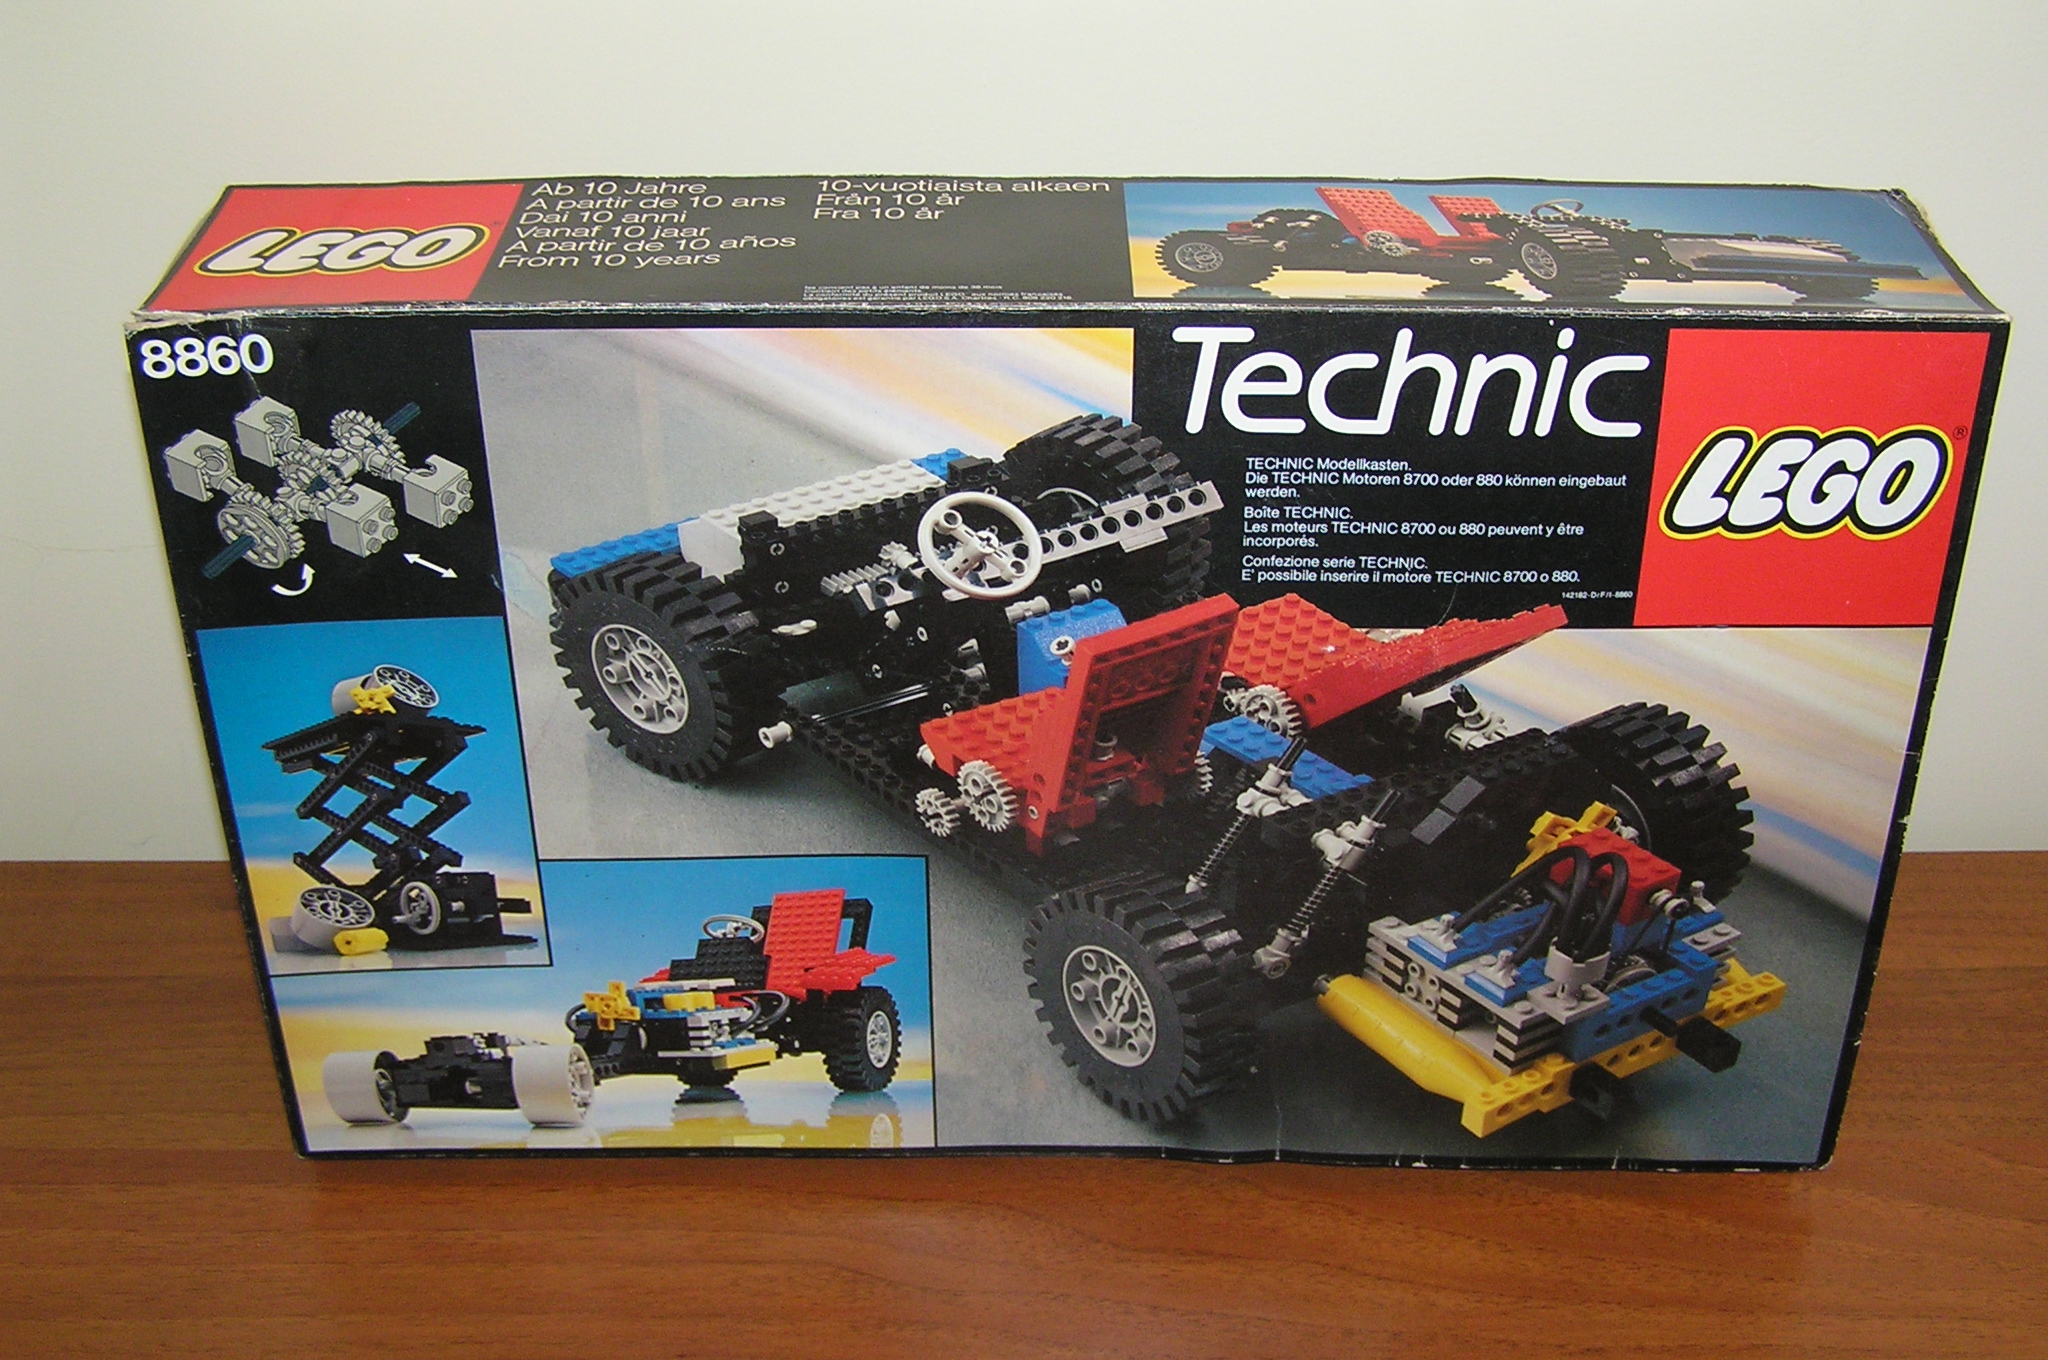 Lego Technic motor set 8700. Have this plus more 4.5 volt motors